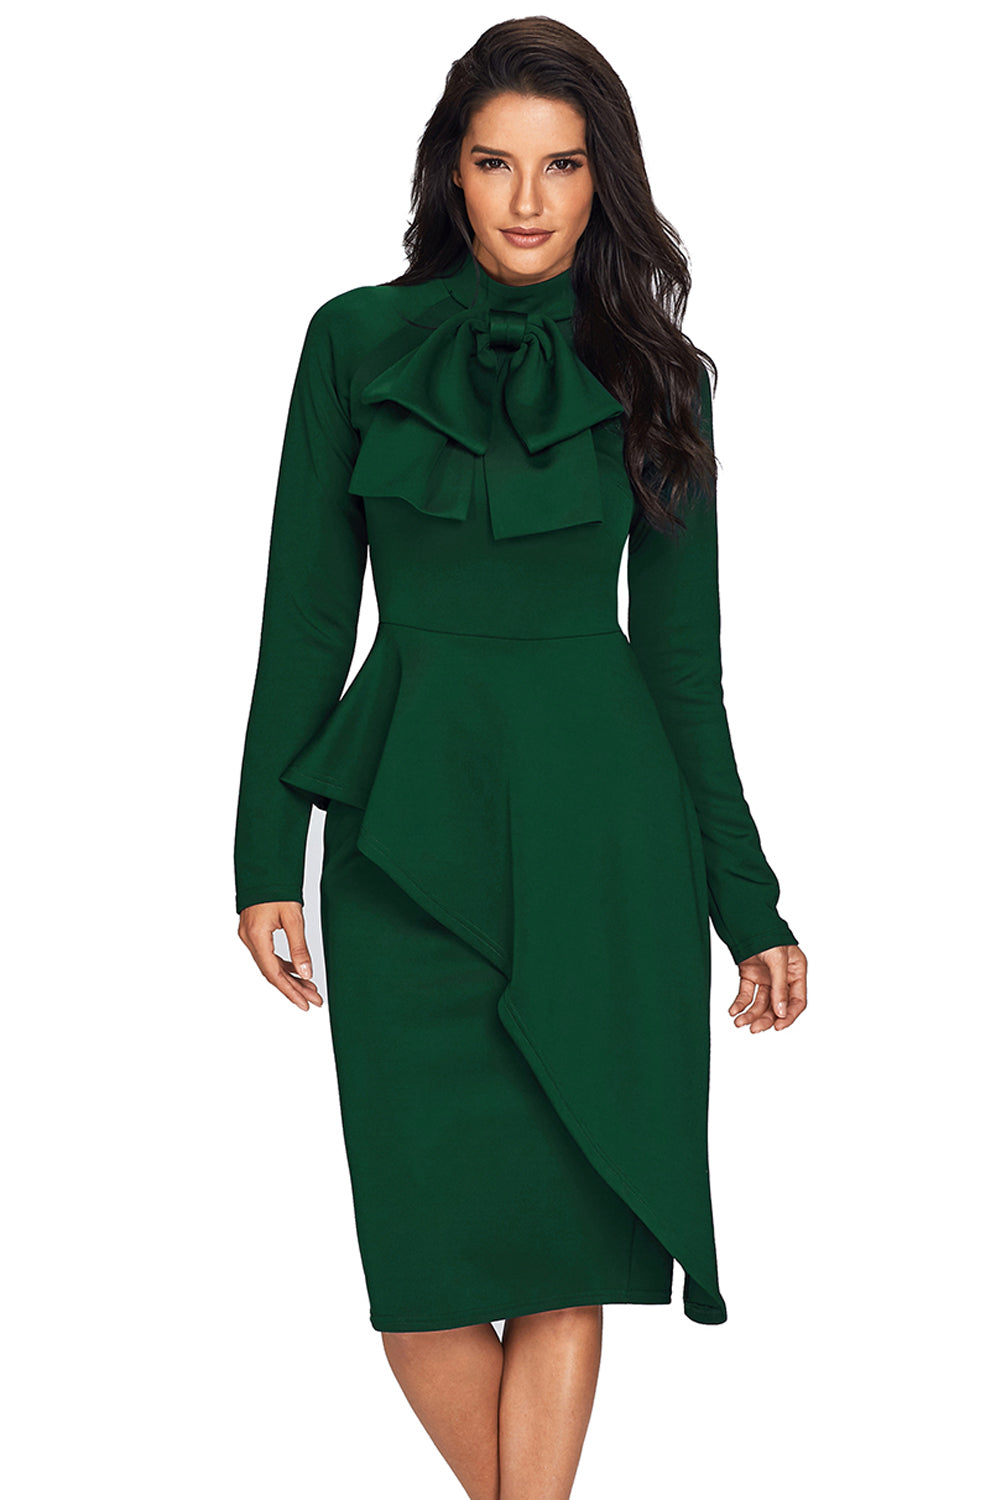 Jade Green Asymmetric Peplum Style Pussy Bow Dress Midi Dresses JT's Designer Fashion